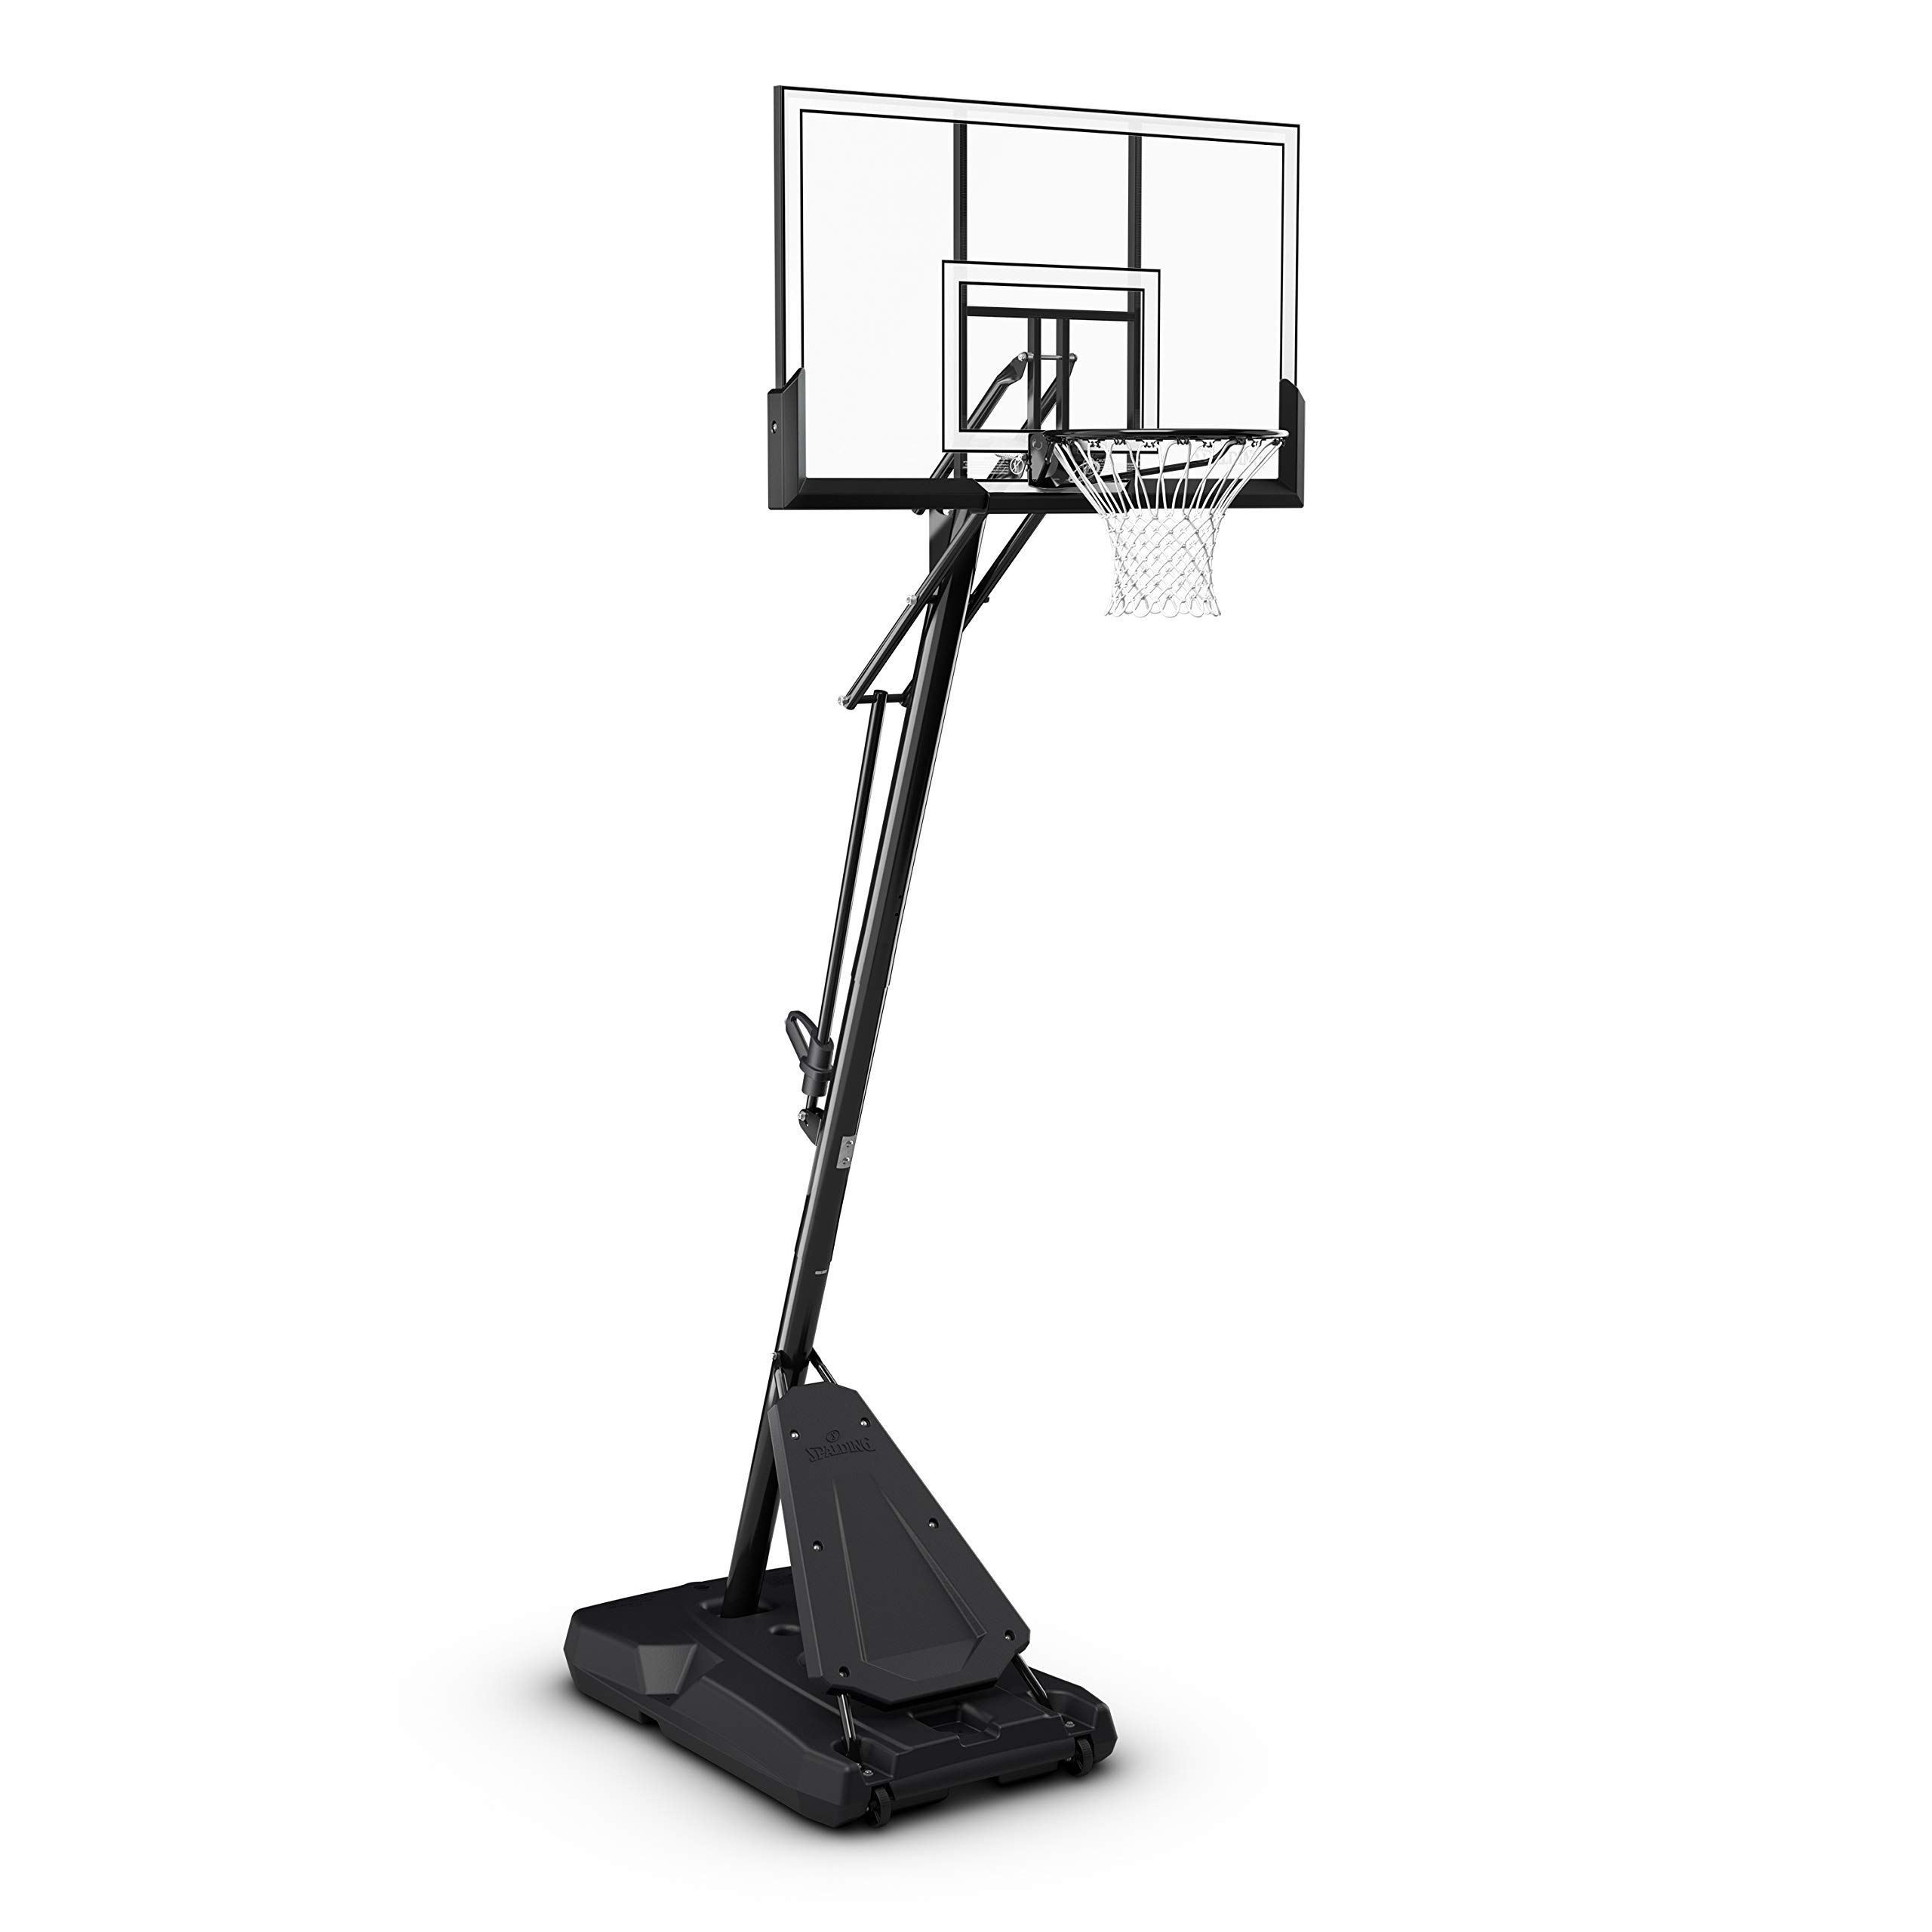 Spalding 52 Performance Acrylic Pro glide AdvancedA Portable Basketball Hoop